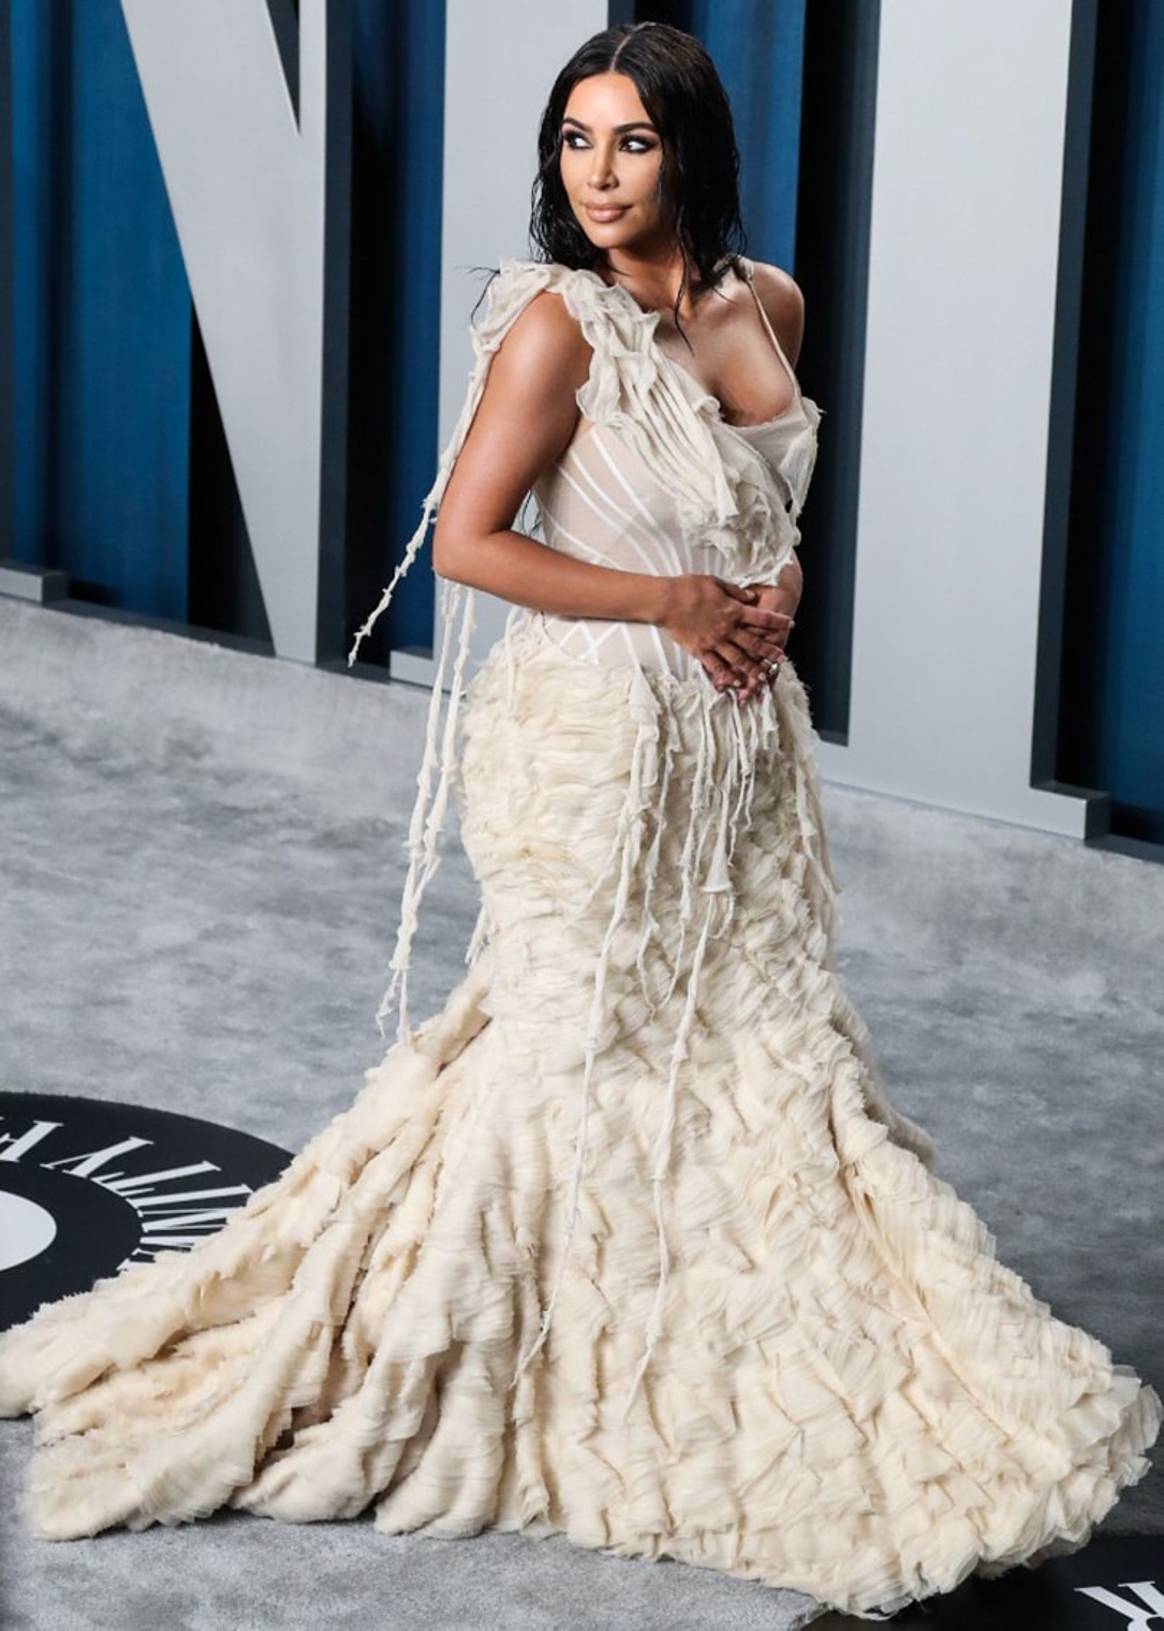 Kim Kardashian West 2020 Vanity Fair Oscar Party. Credit: Image Press Agency / NurPhoto